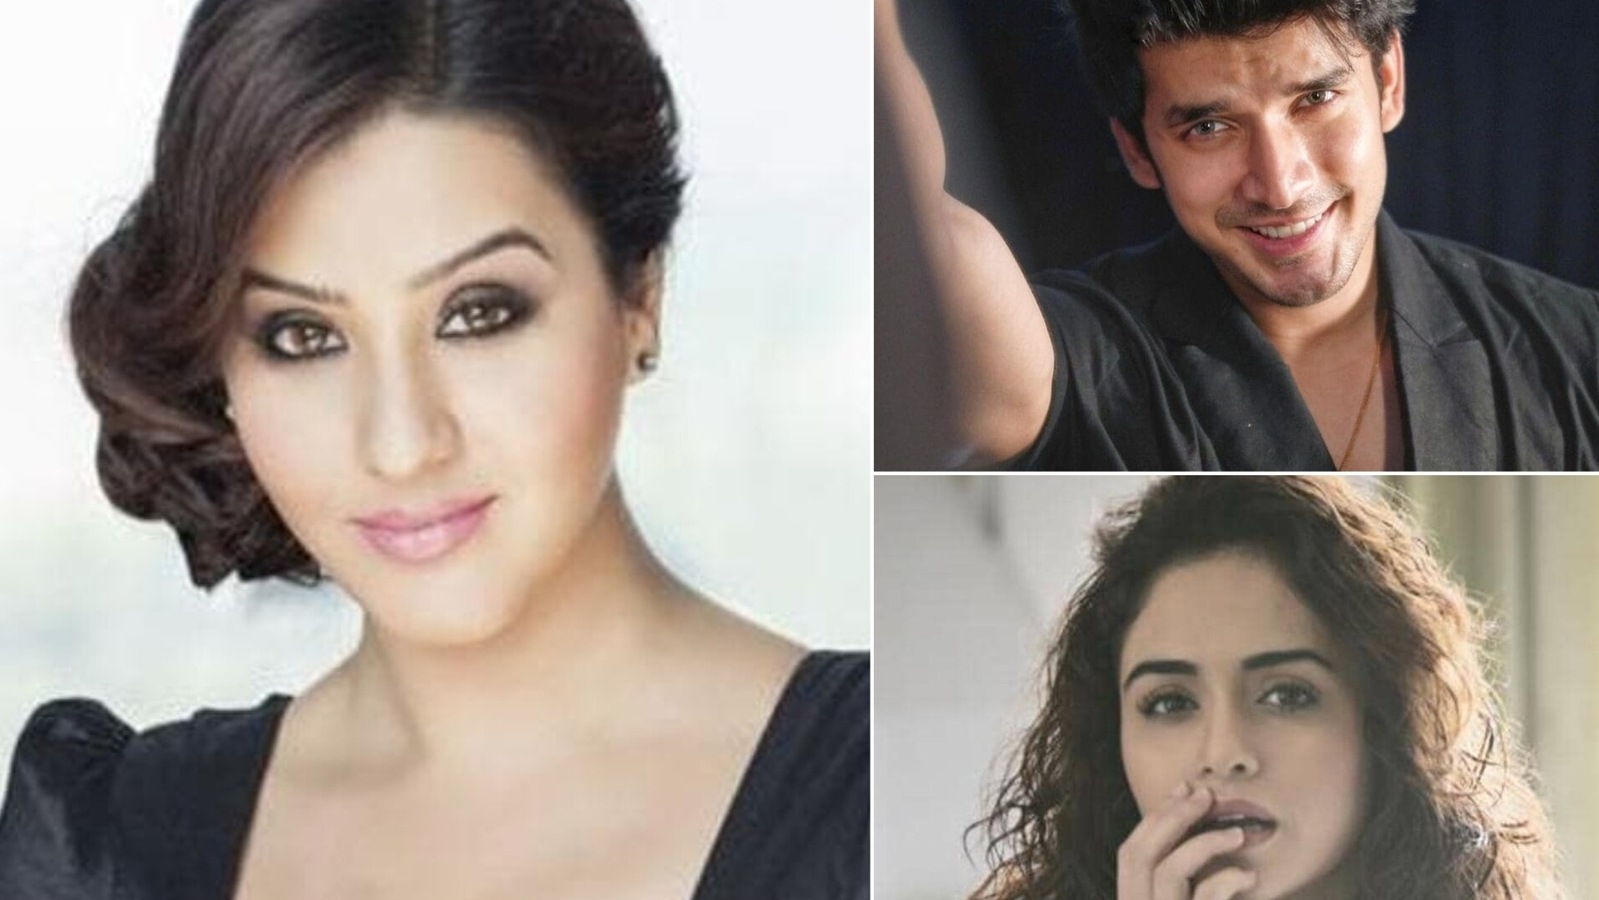 Jhalak Dikhlaa Jaa 10 confirmed contestants: Shilpa Shinde, Amruta Khanwilkar and more; Tony Kakkar, Ali Asgar may join